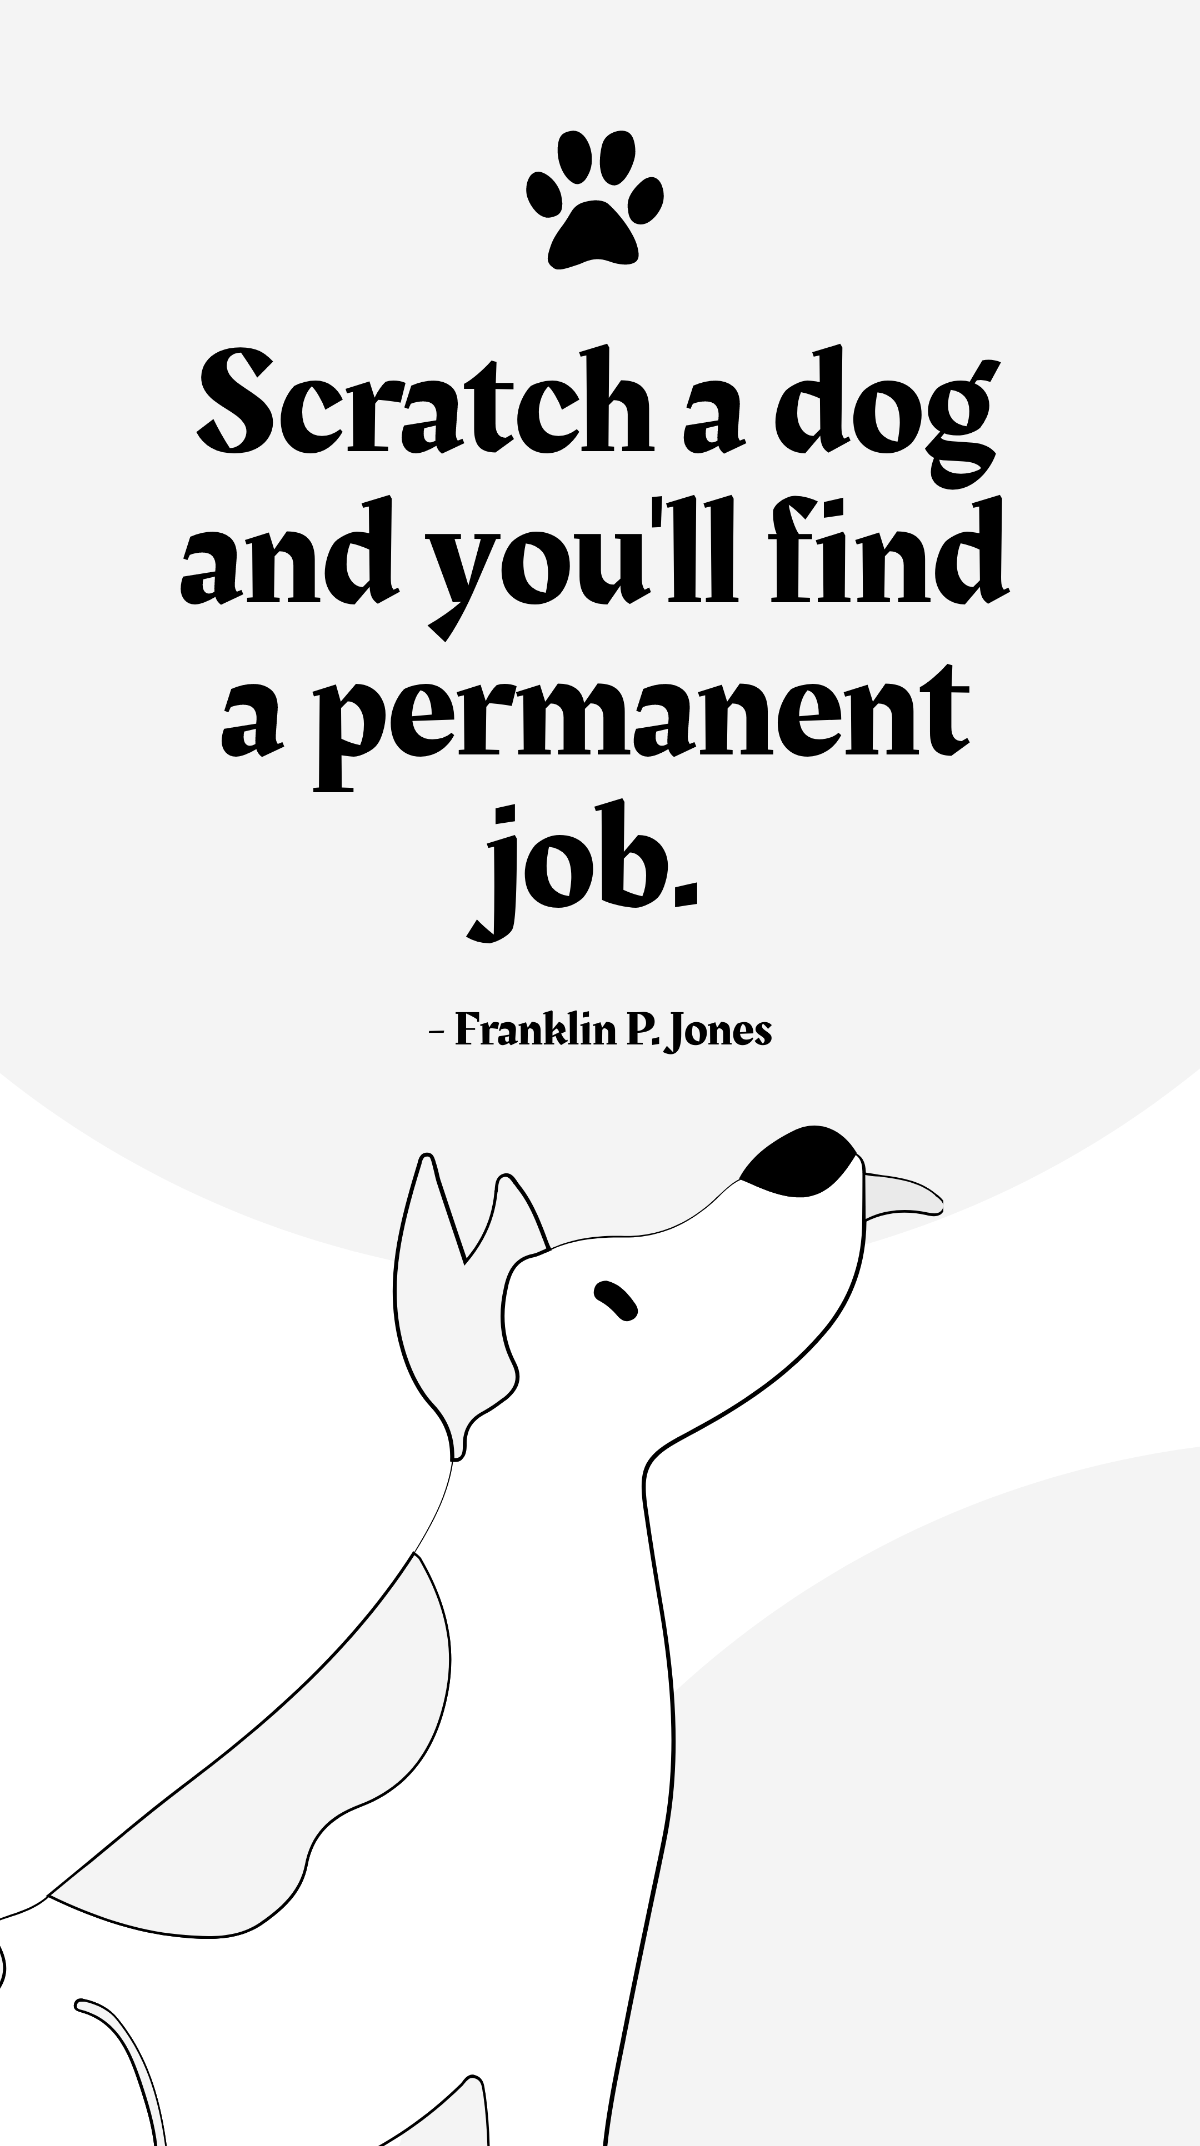 Franklin P. Jones - Scratch a dog and you'll find a permanent job. Template